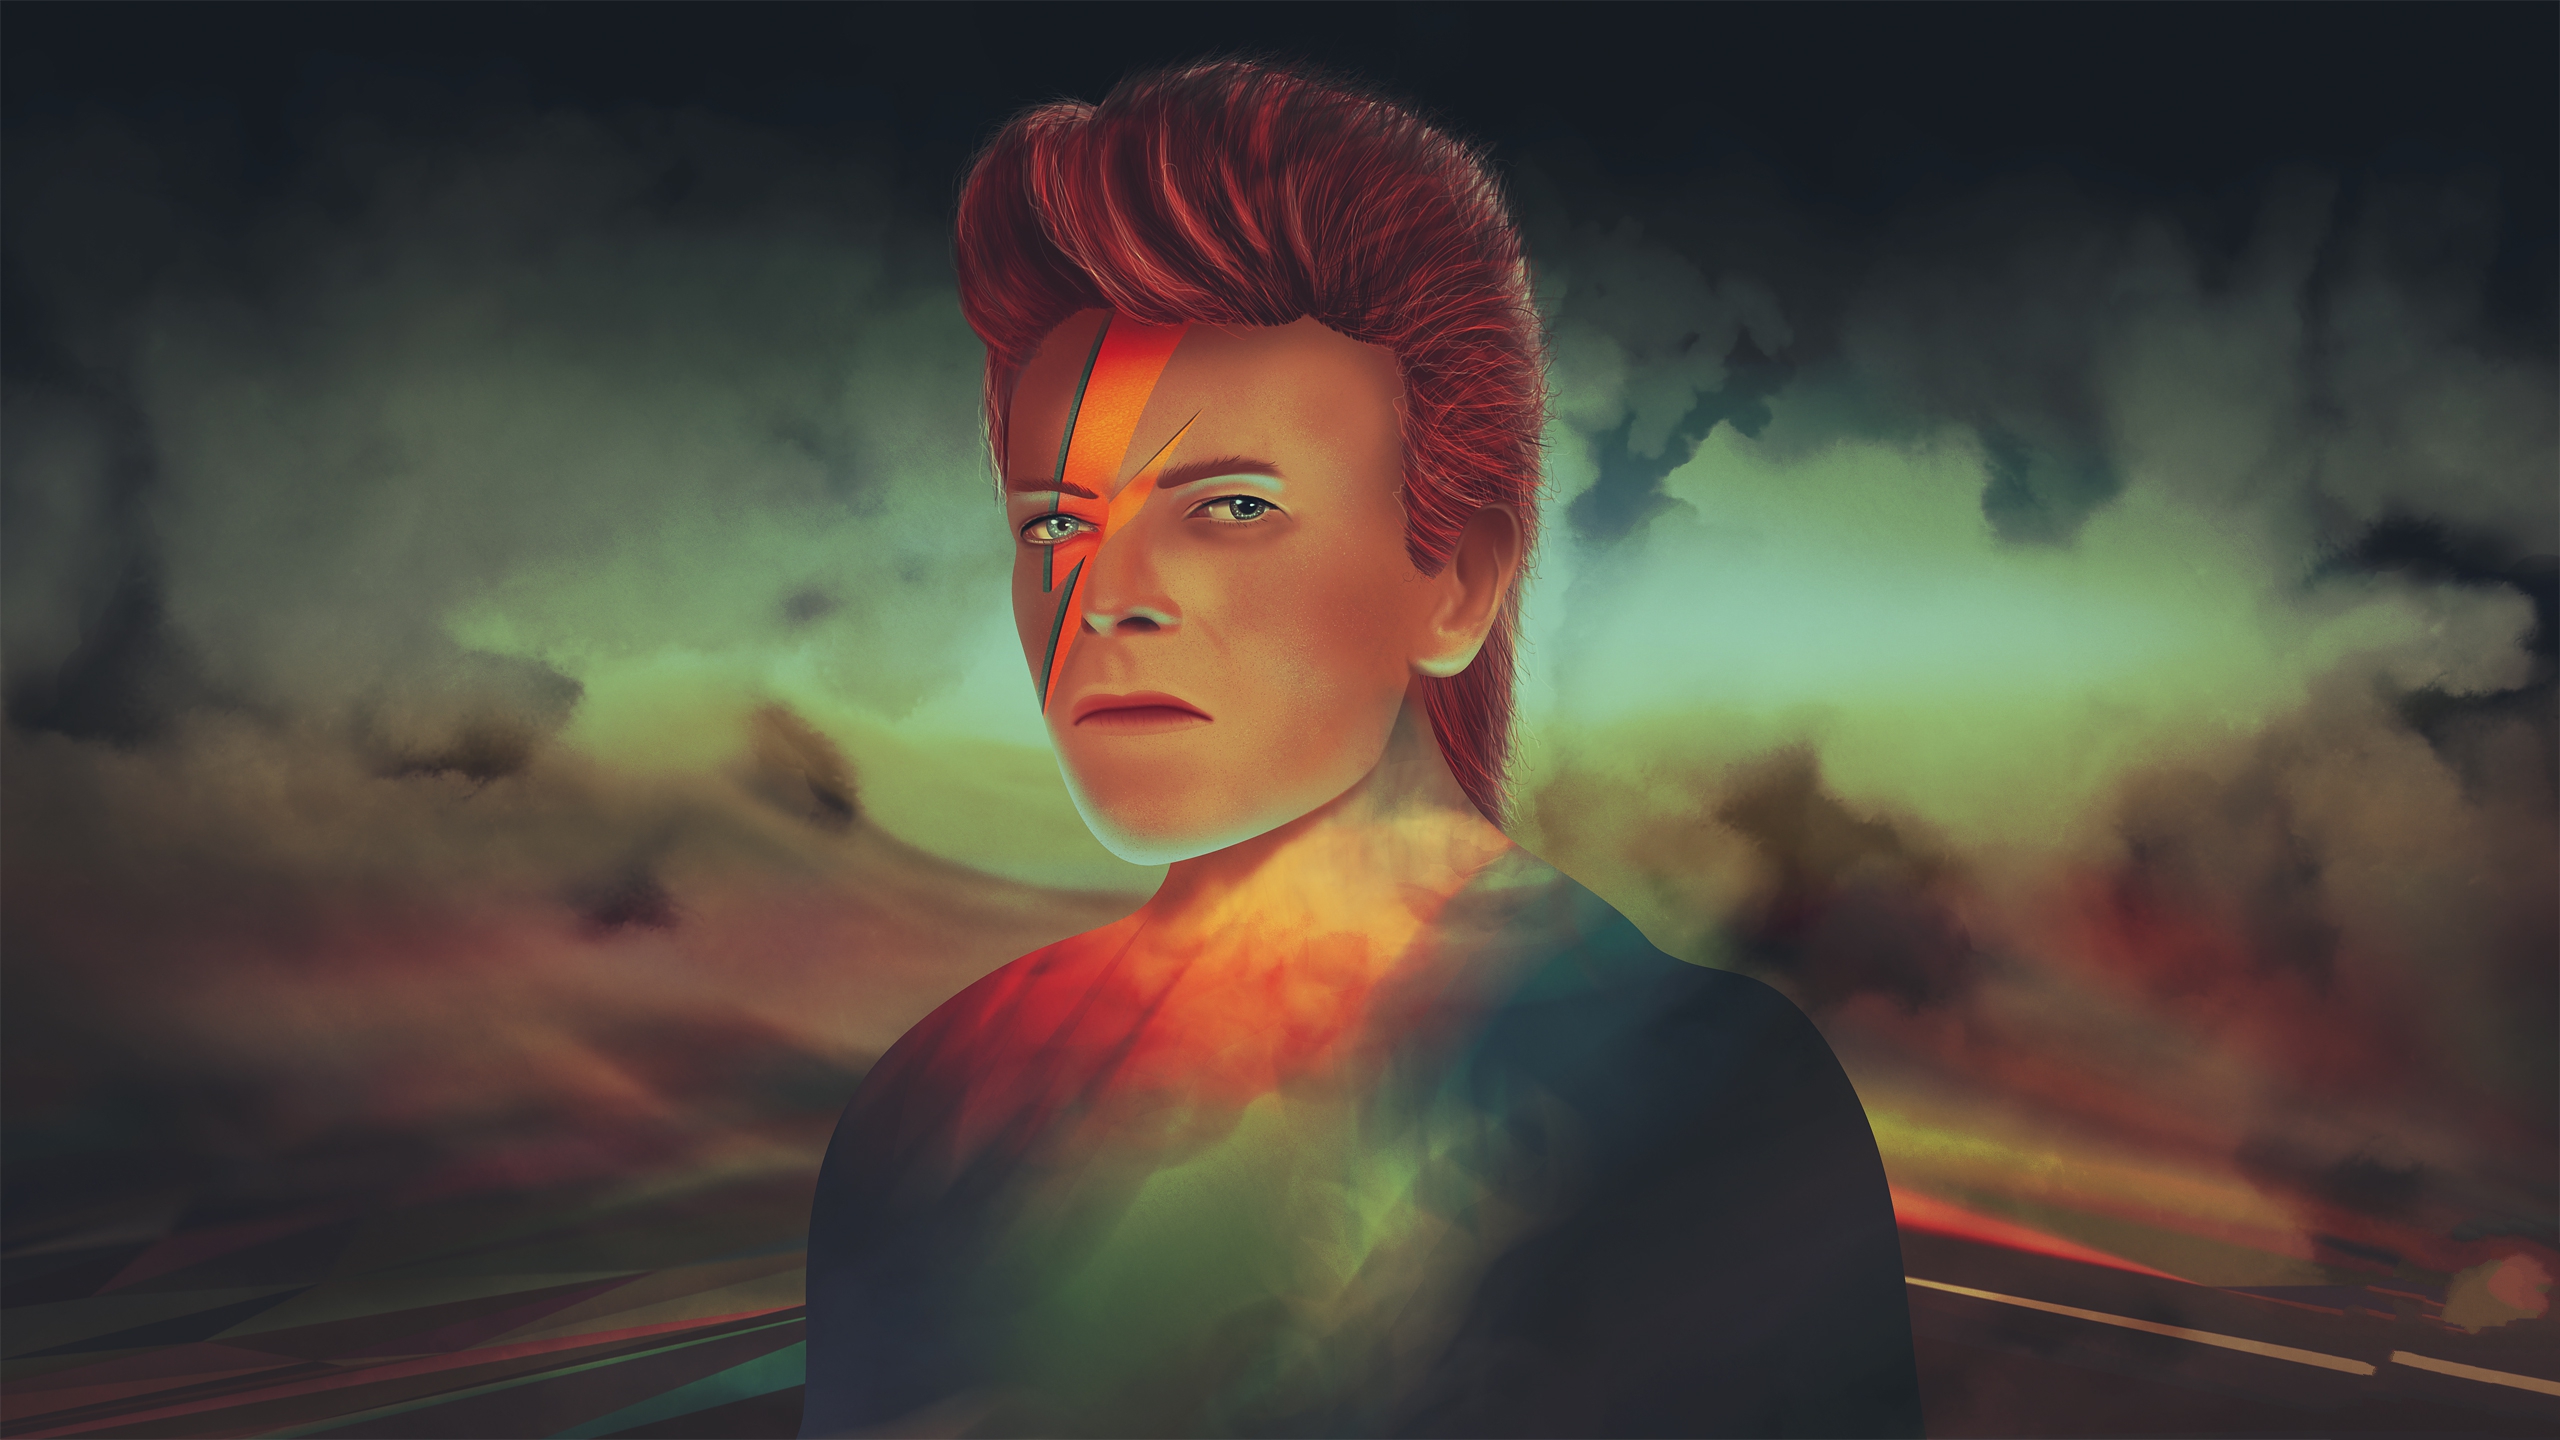 David Bowie Wallpaper for Desktop  PixelsTalk.Net